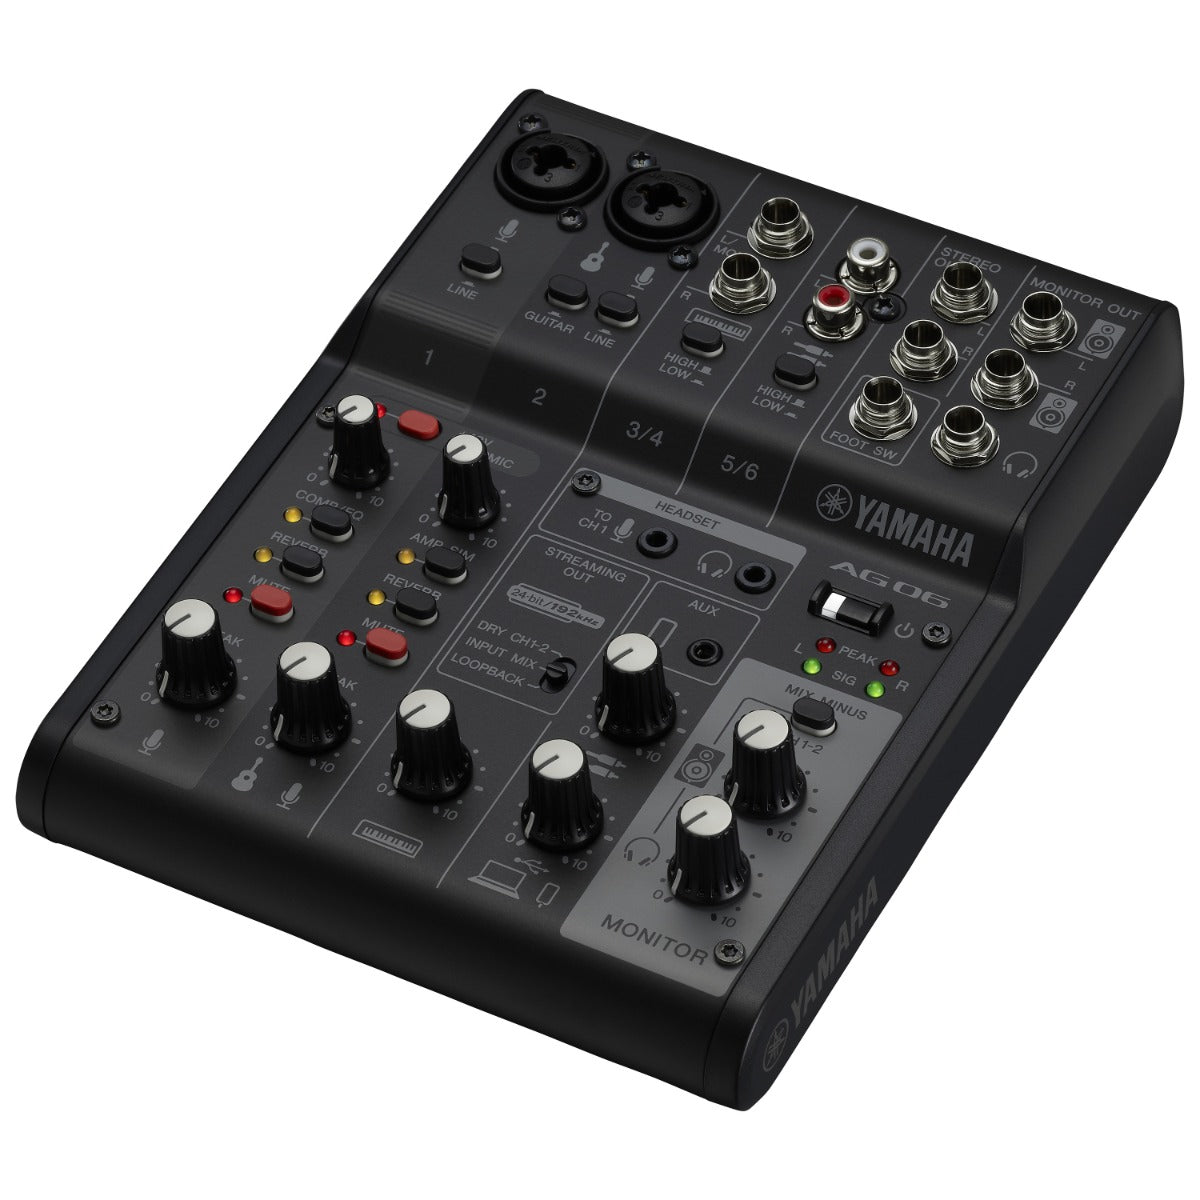 Yamaha AG06 Mk2 Live Streaming Mixer and USB Audio Interface - Black C –  Kraft Music